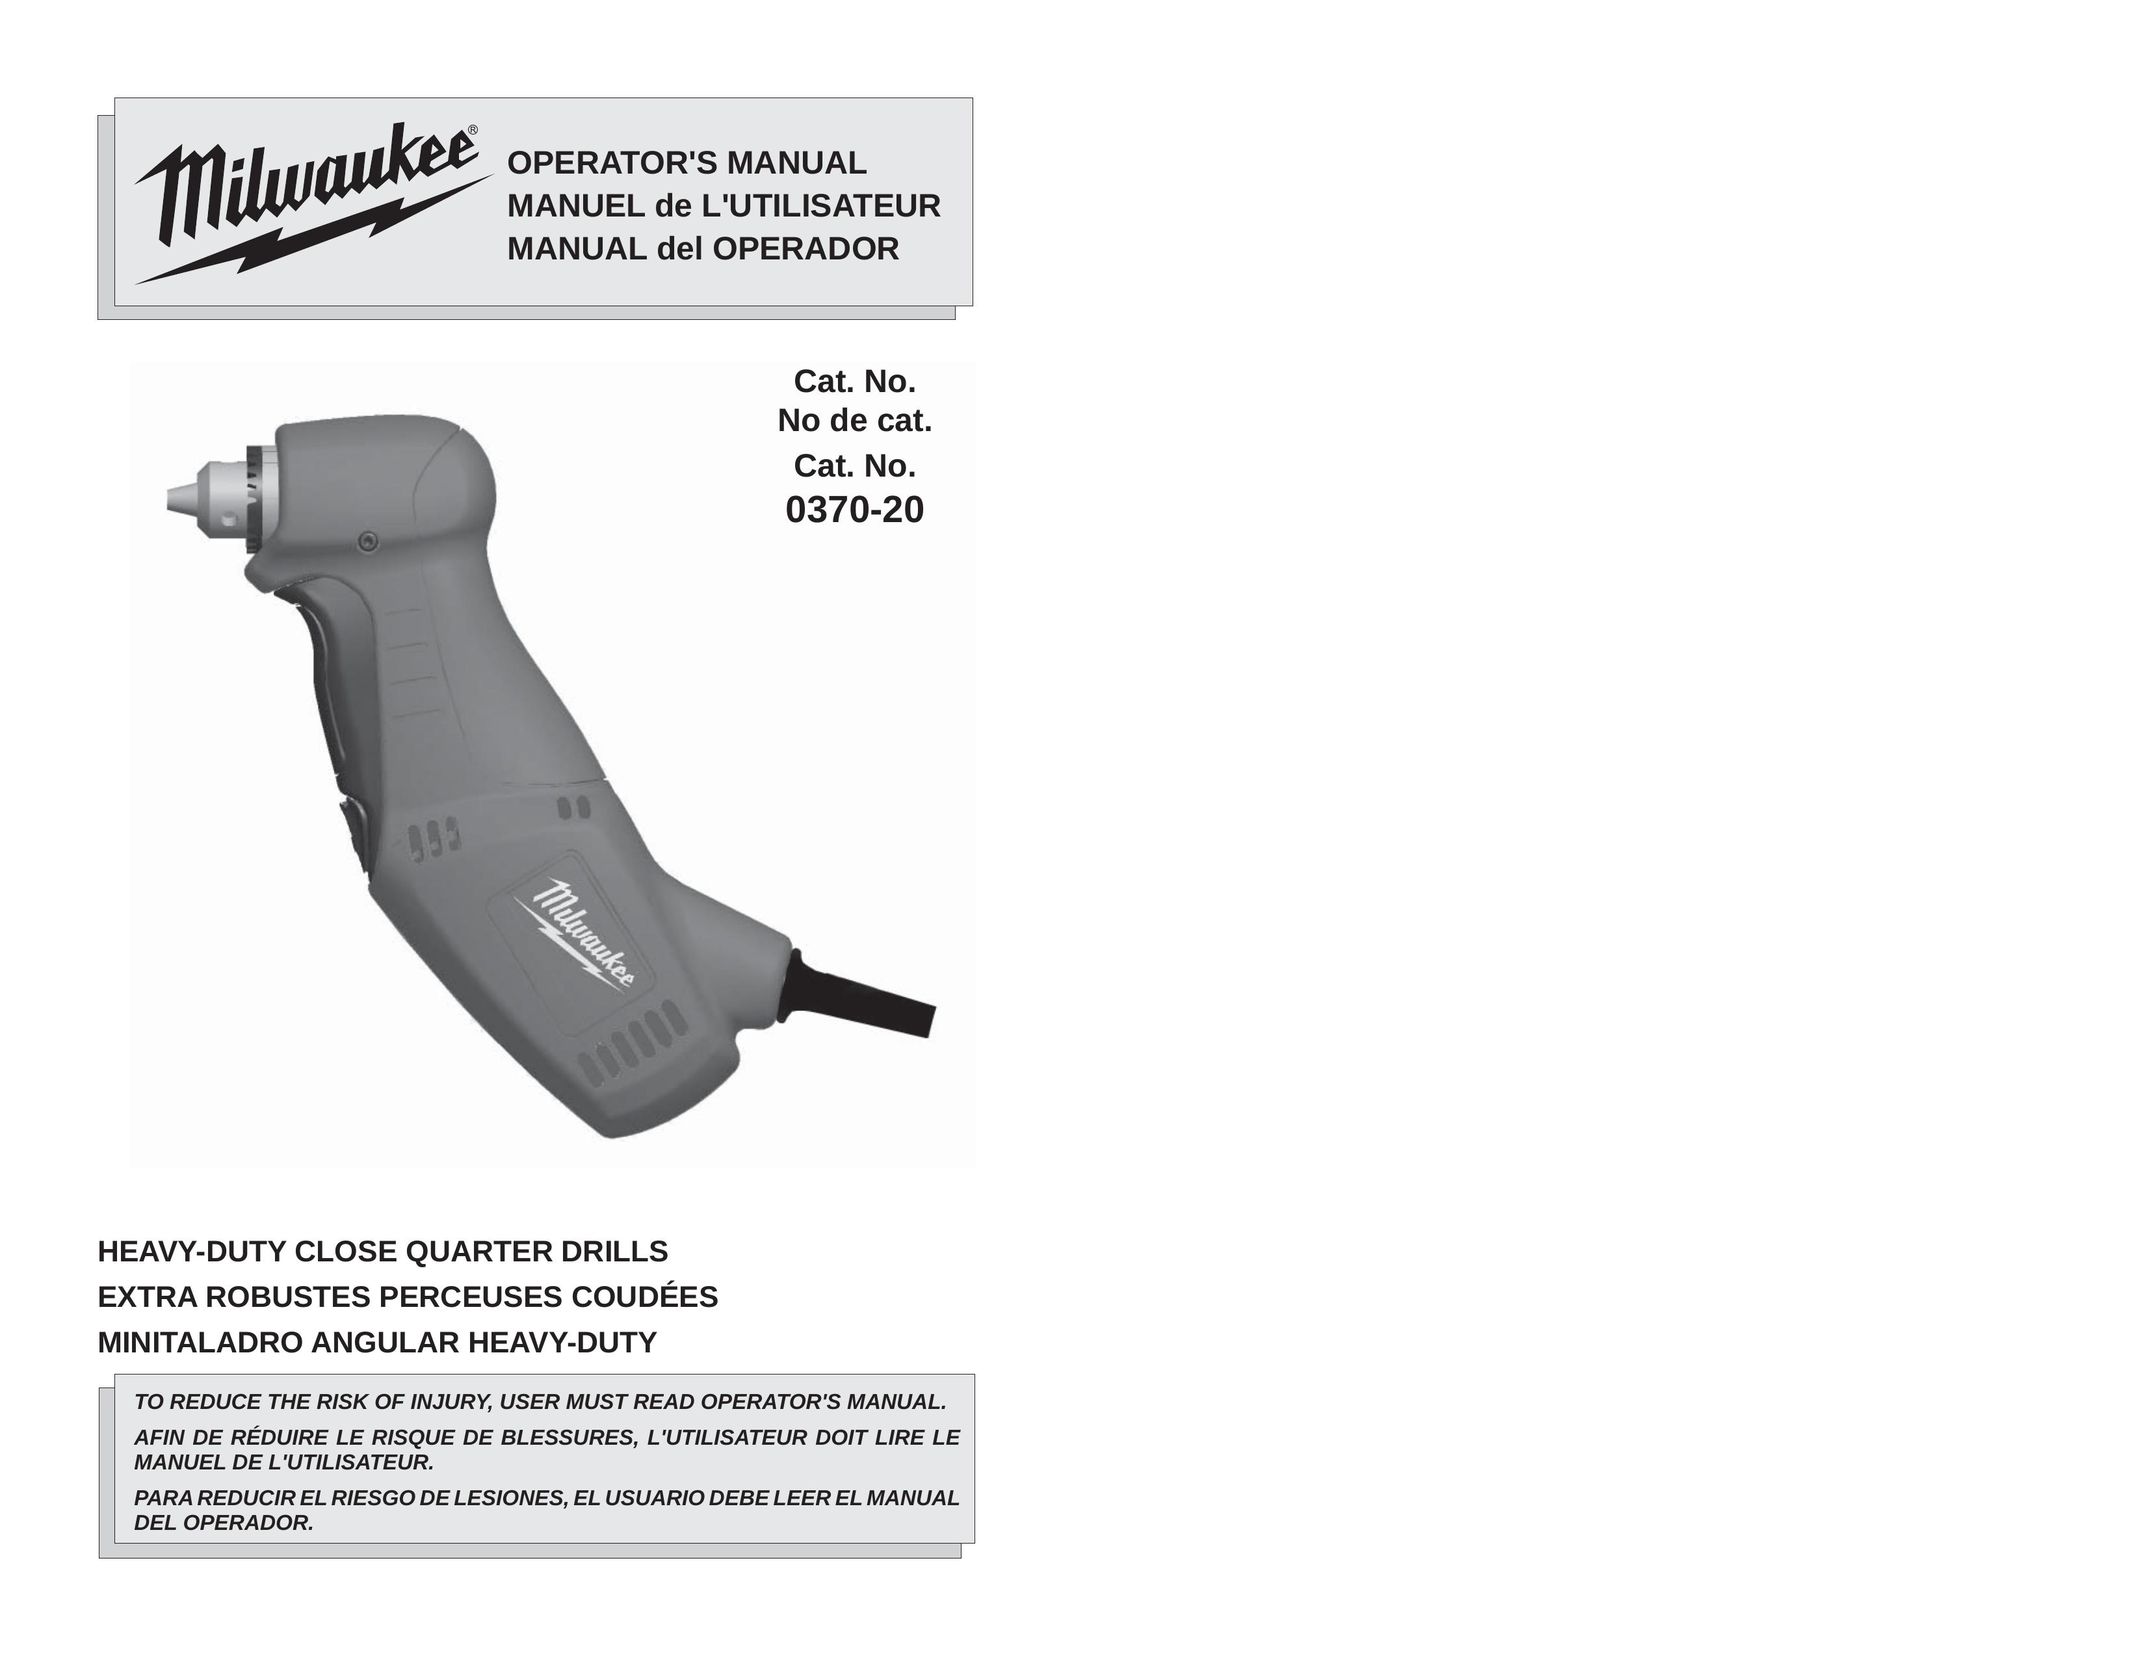 Milwaukee 0370-20 Drill User Manual